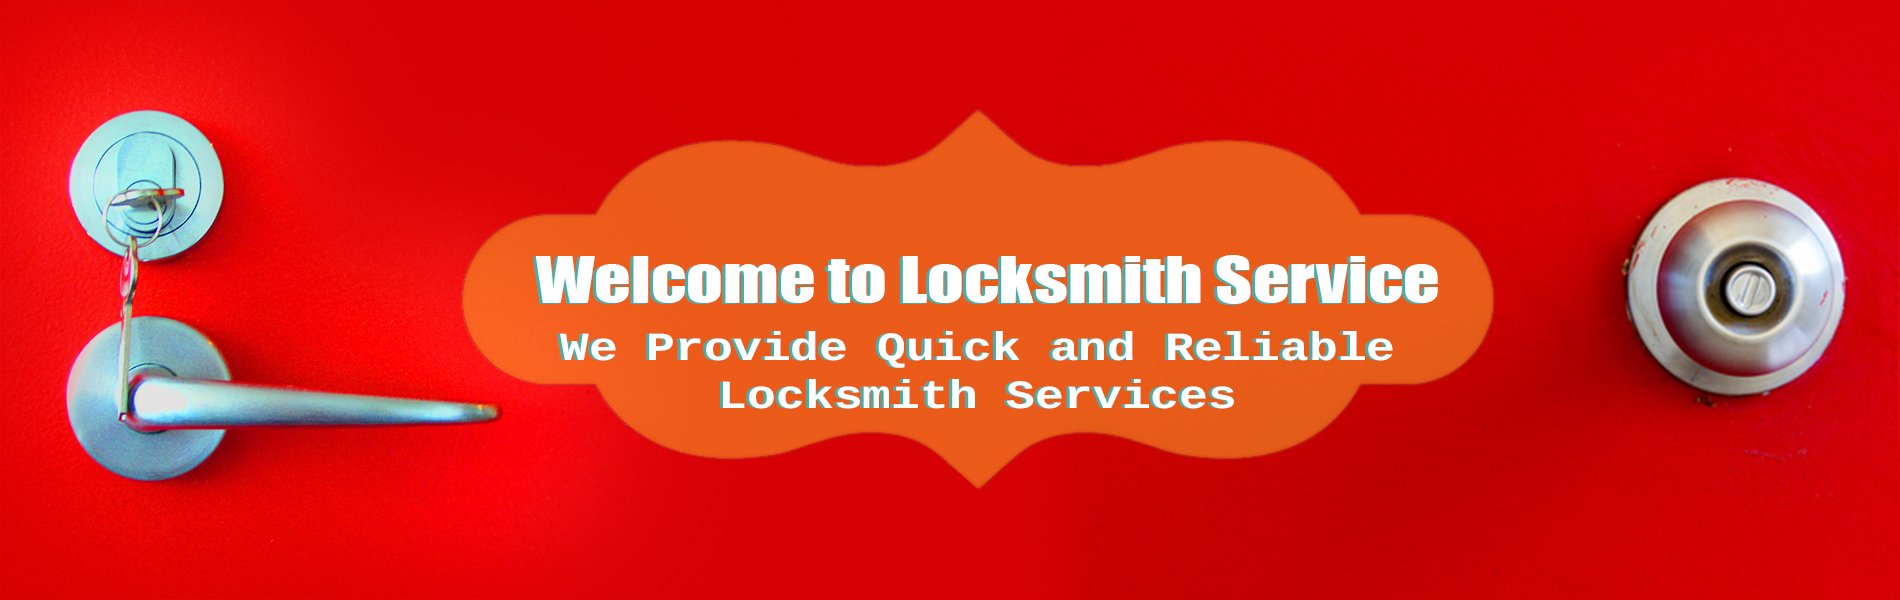 Town Center Locksmith Shop Metairie, LA 504-226-8633